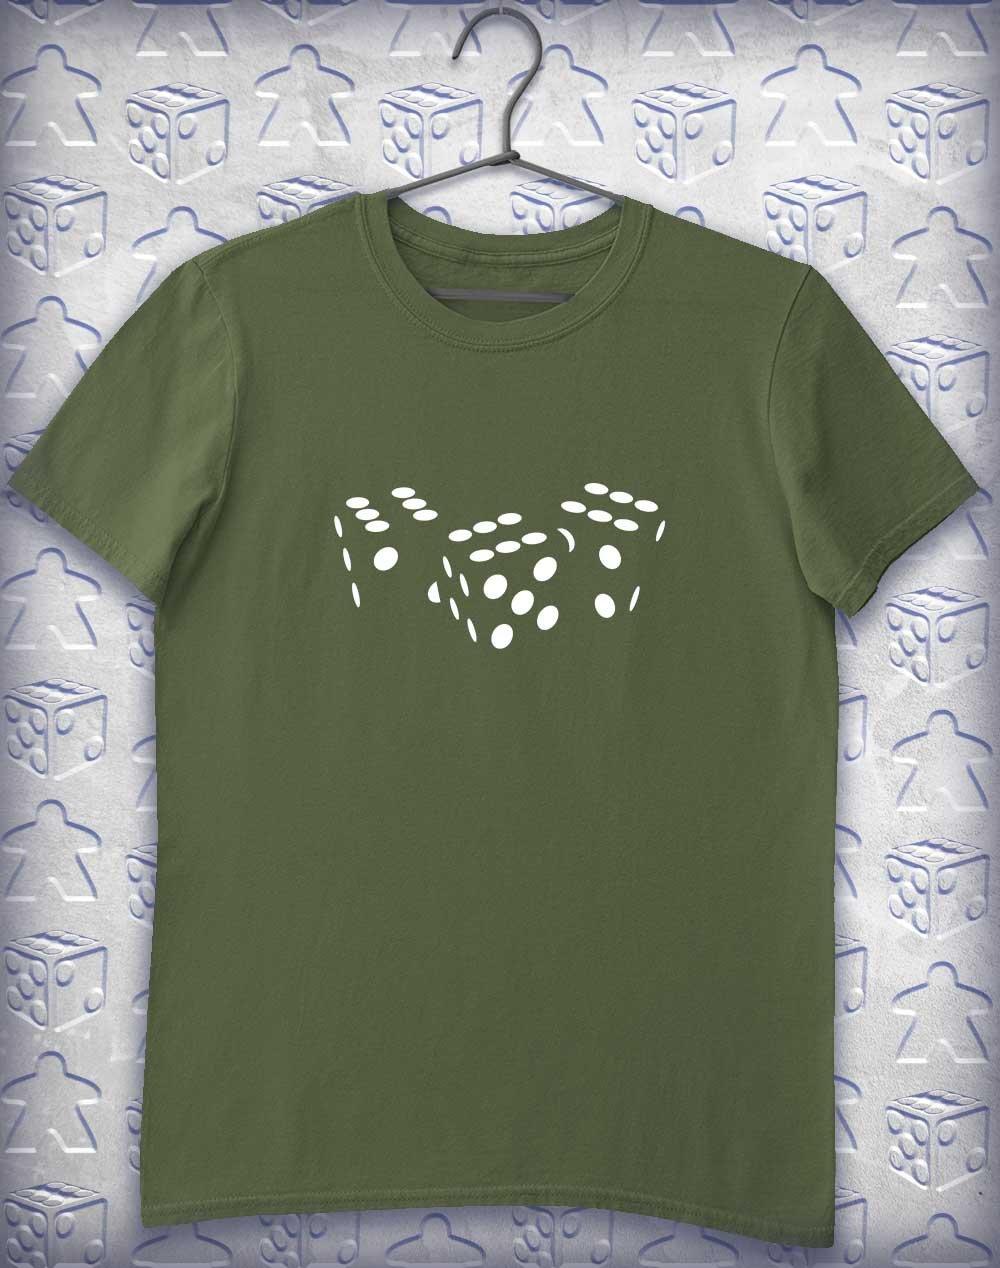 Pips Alphagamer T-Shirt S / Military Green  - Off World Tees